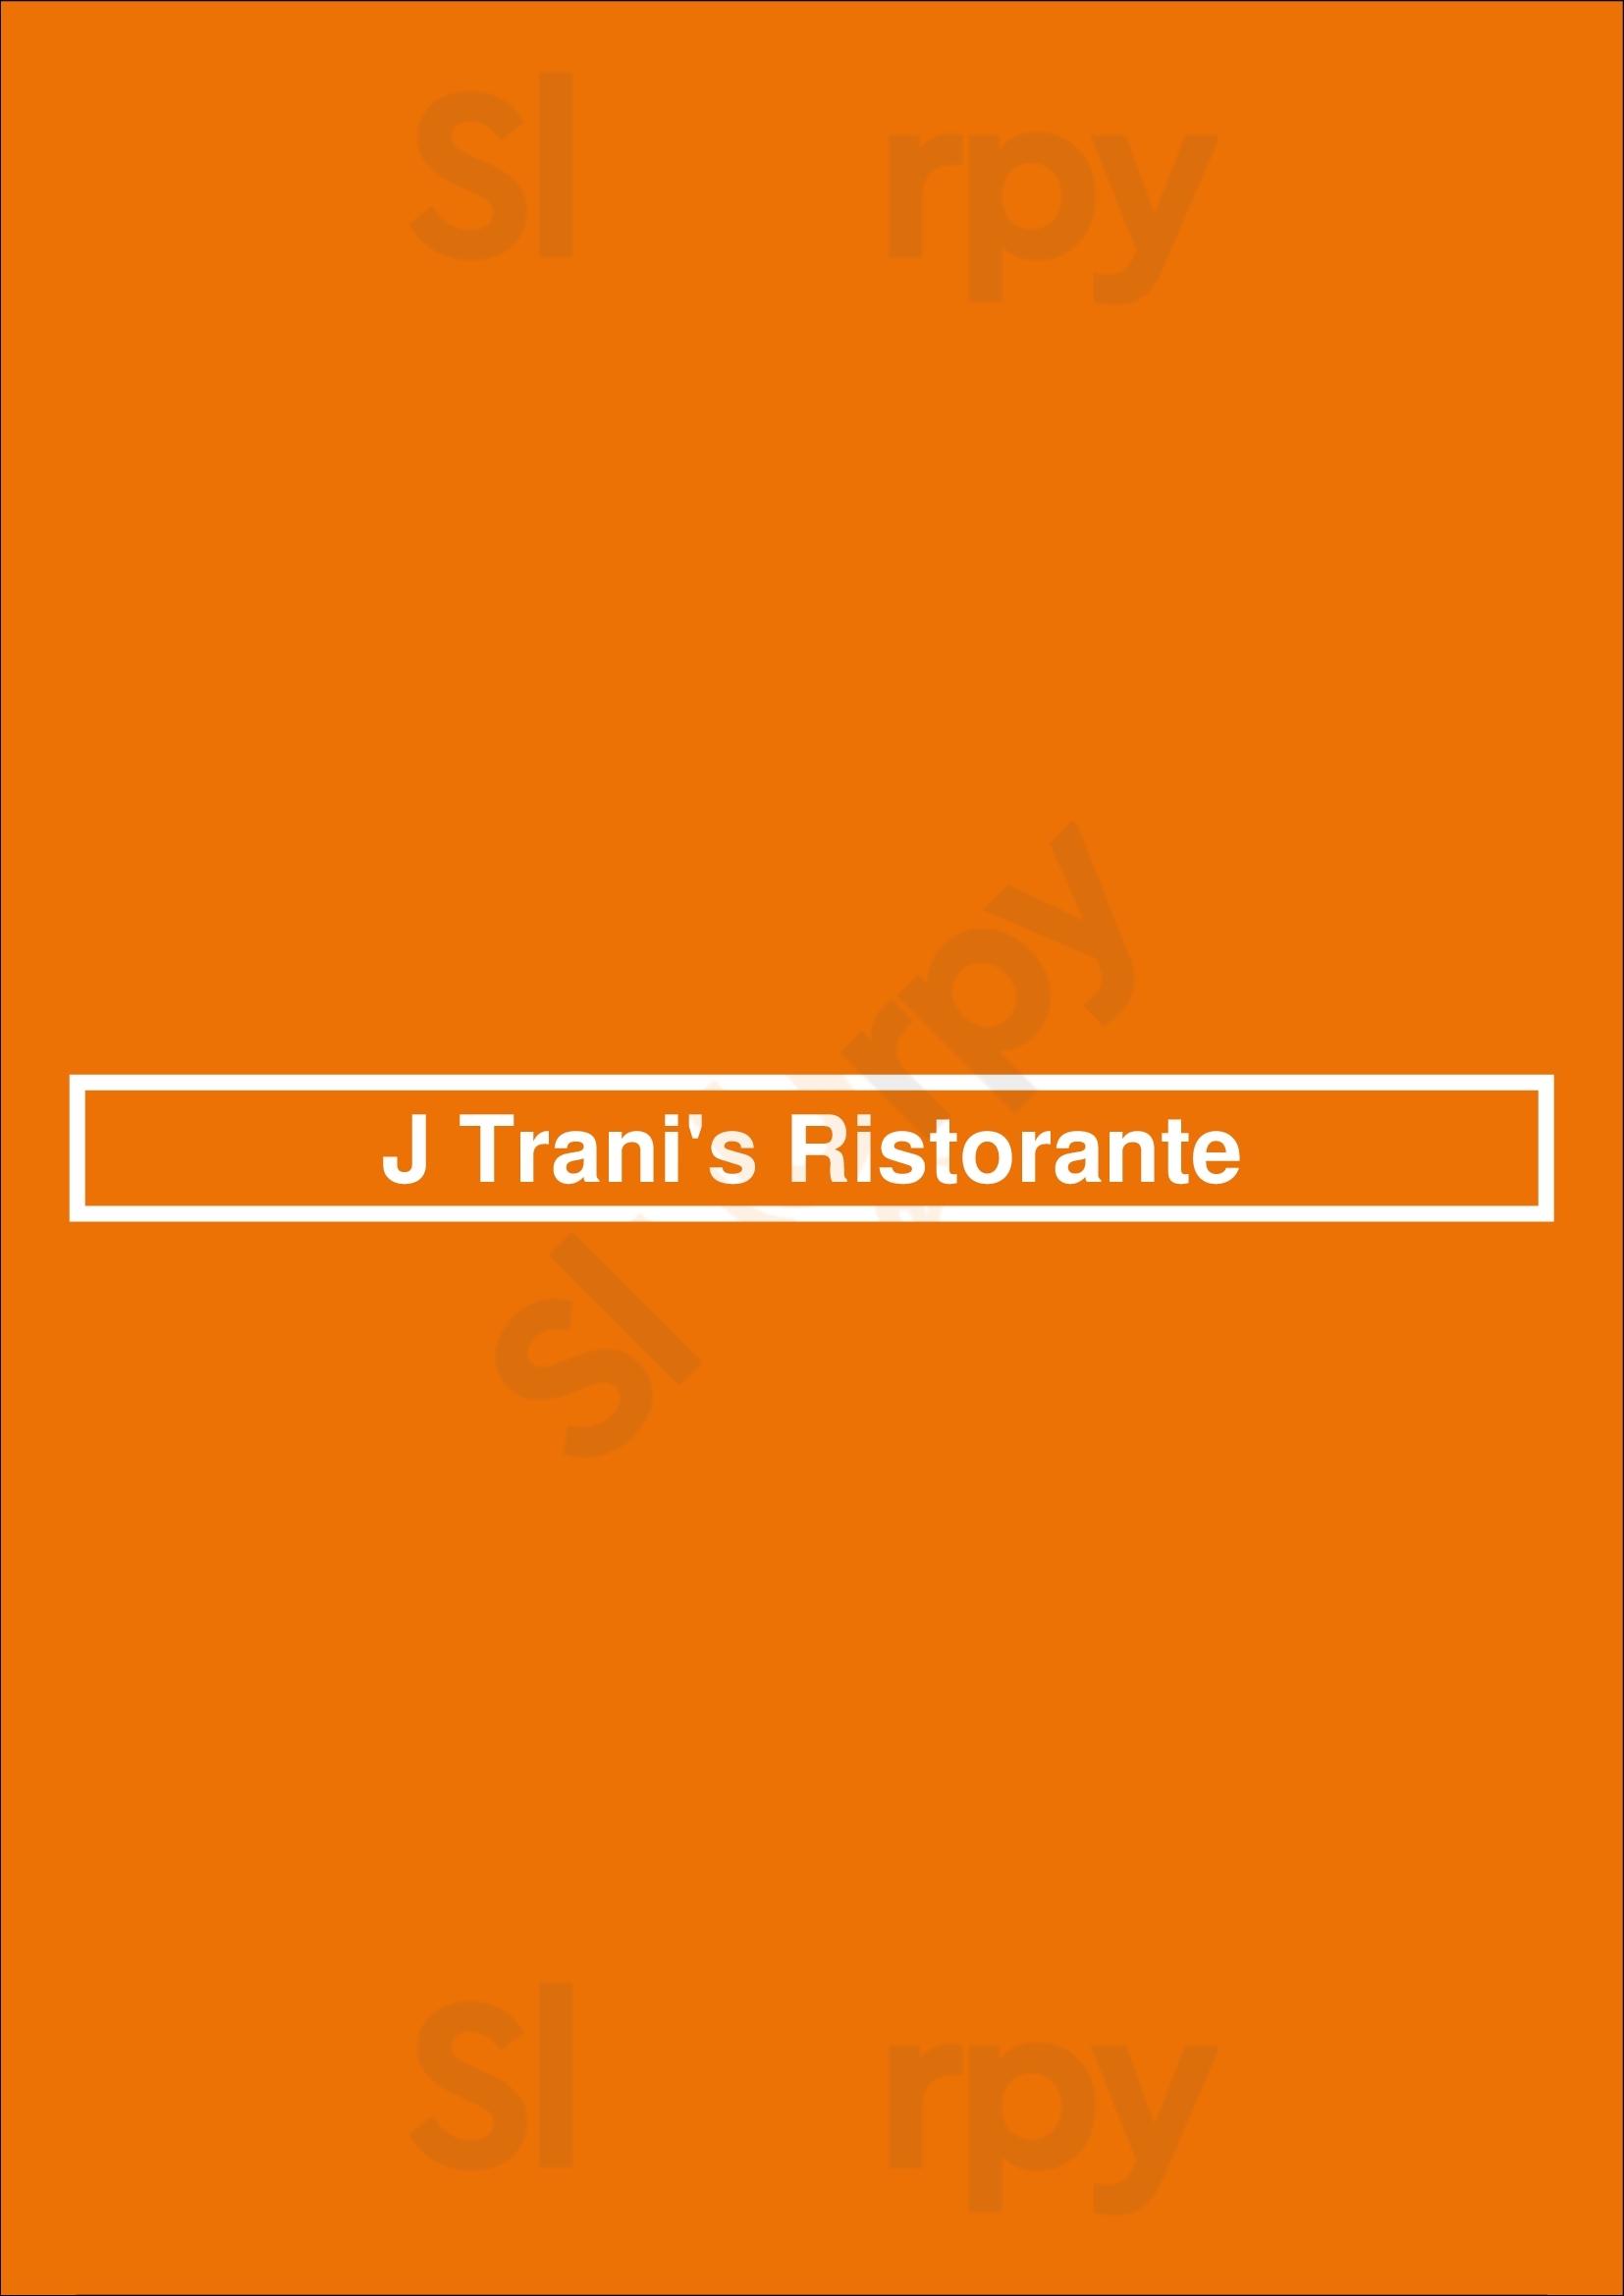 J Trani's Ristorante Los Angeles Menu - 1